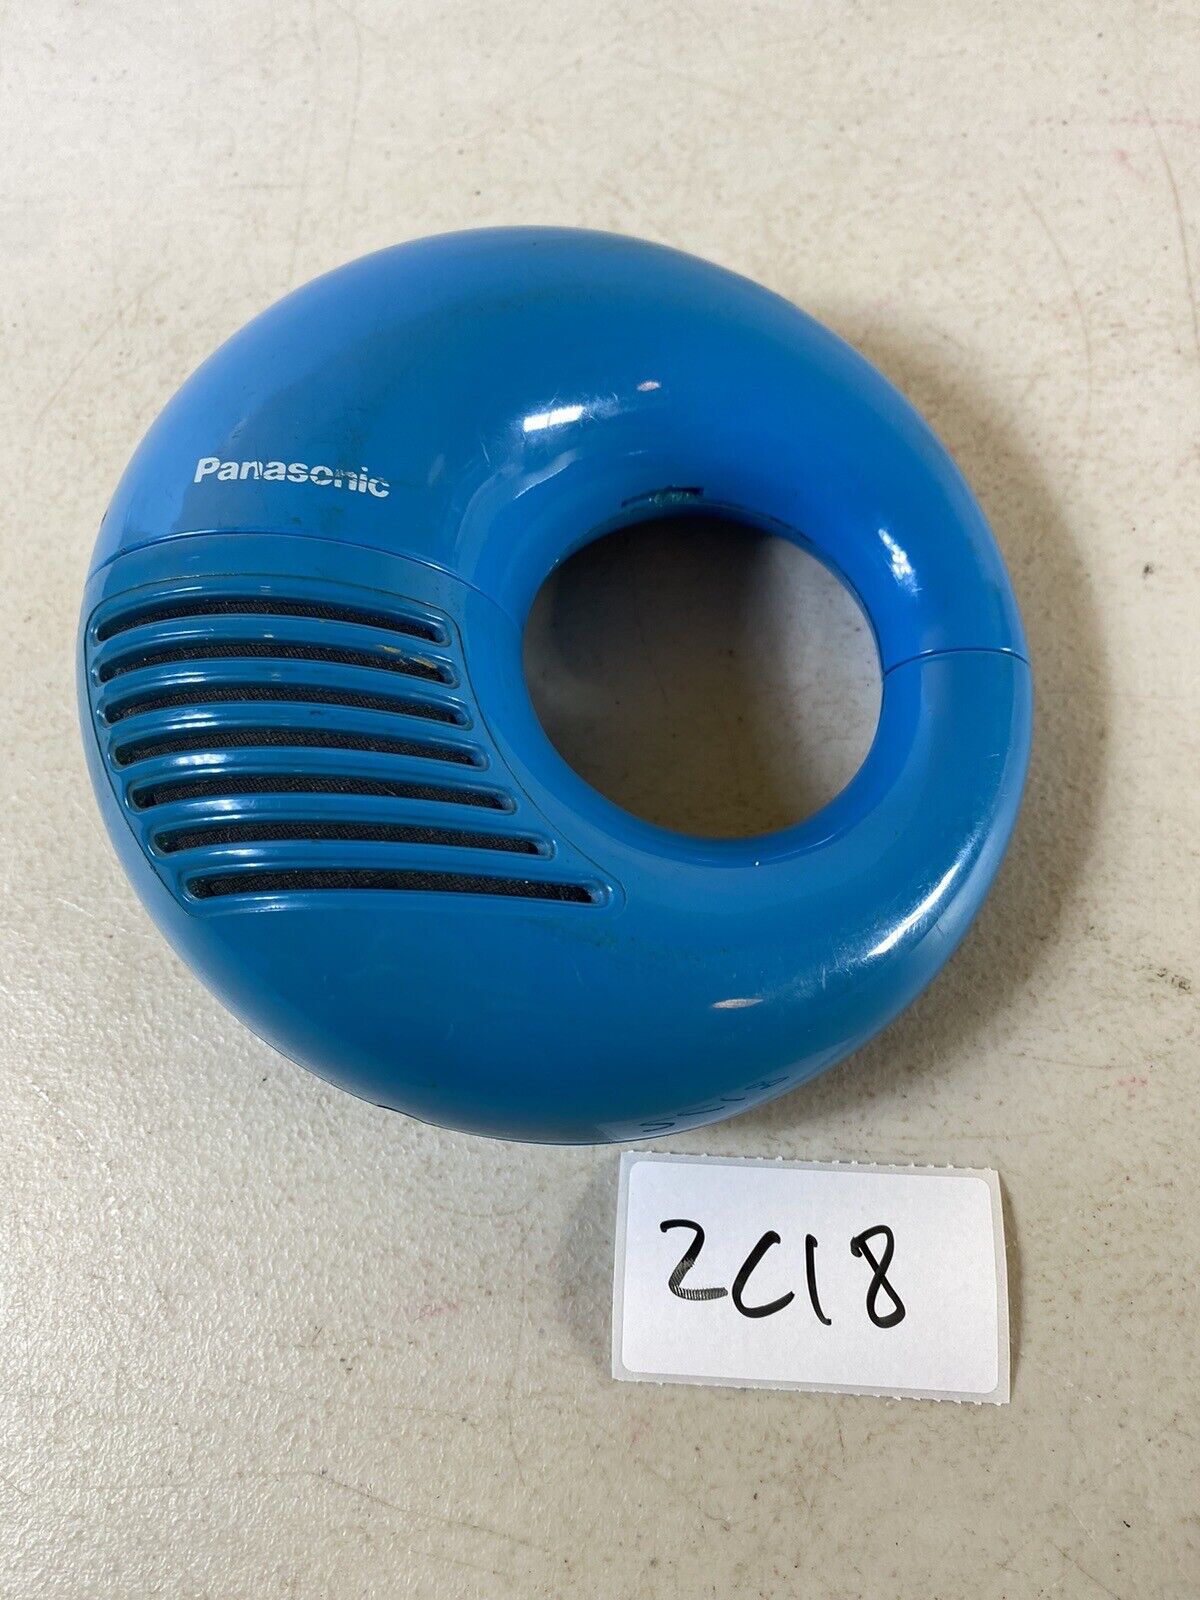 Panasonic Toot-a-Loop Radio R-72 AM Transistor Vintage Blue working 2C18